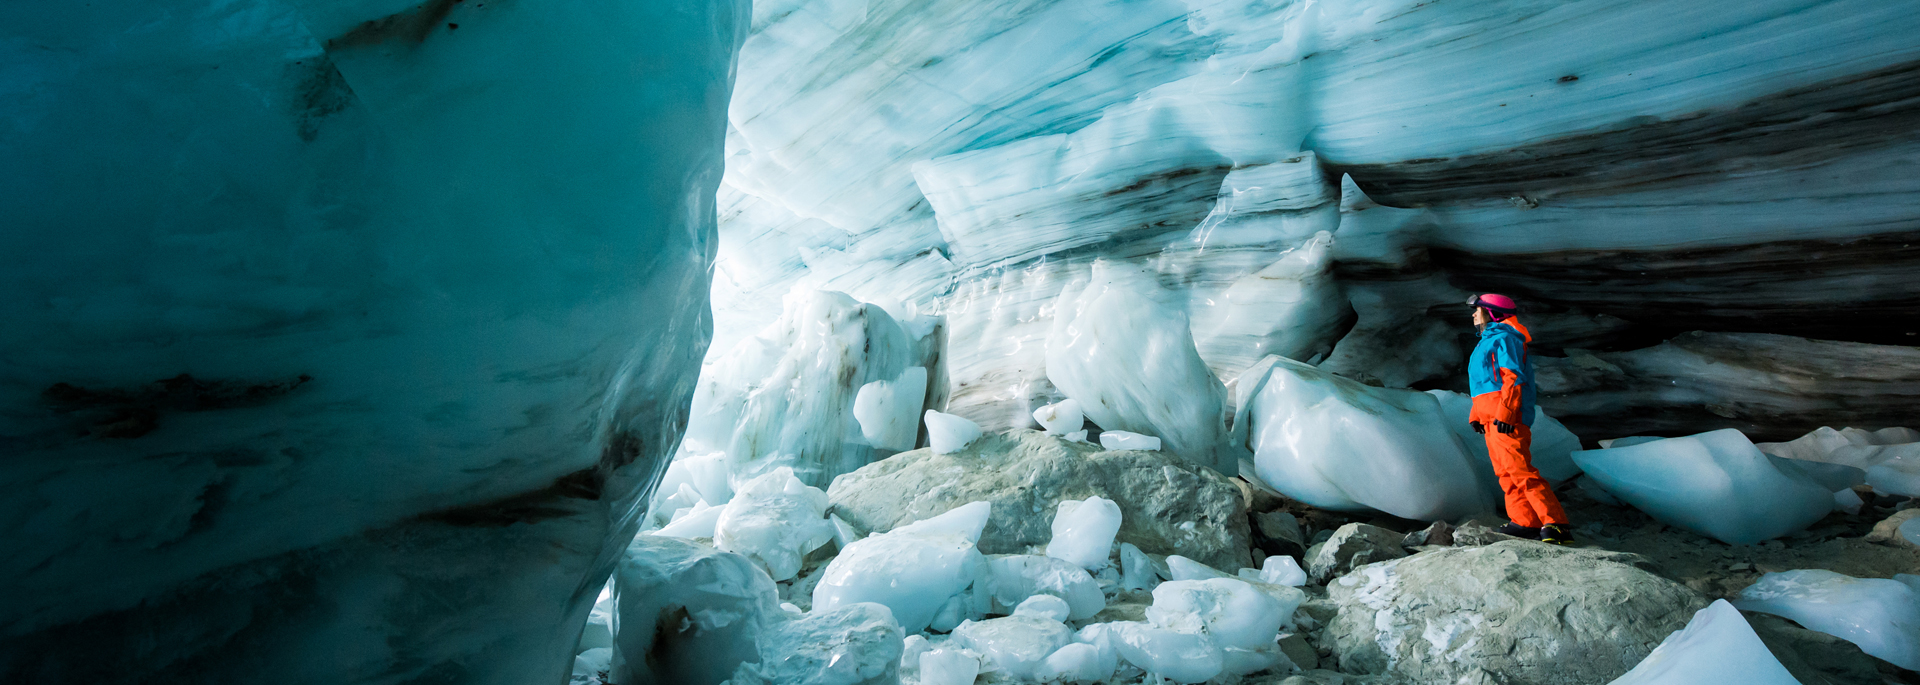 canada winter ice cave